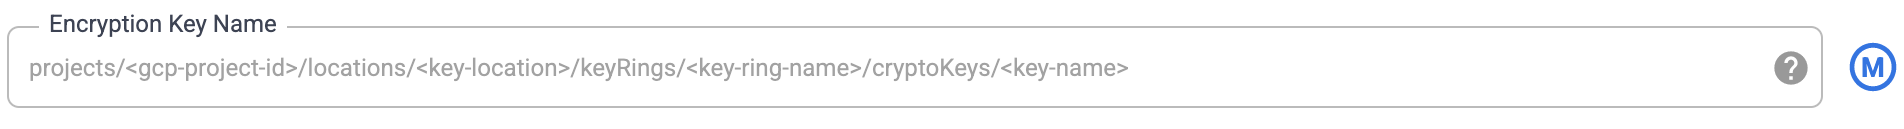 Nombres de claves de encriptación